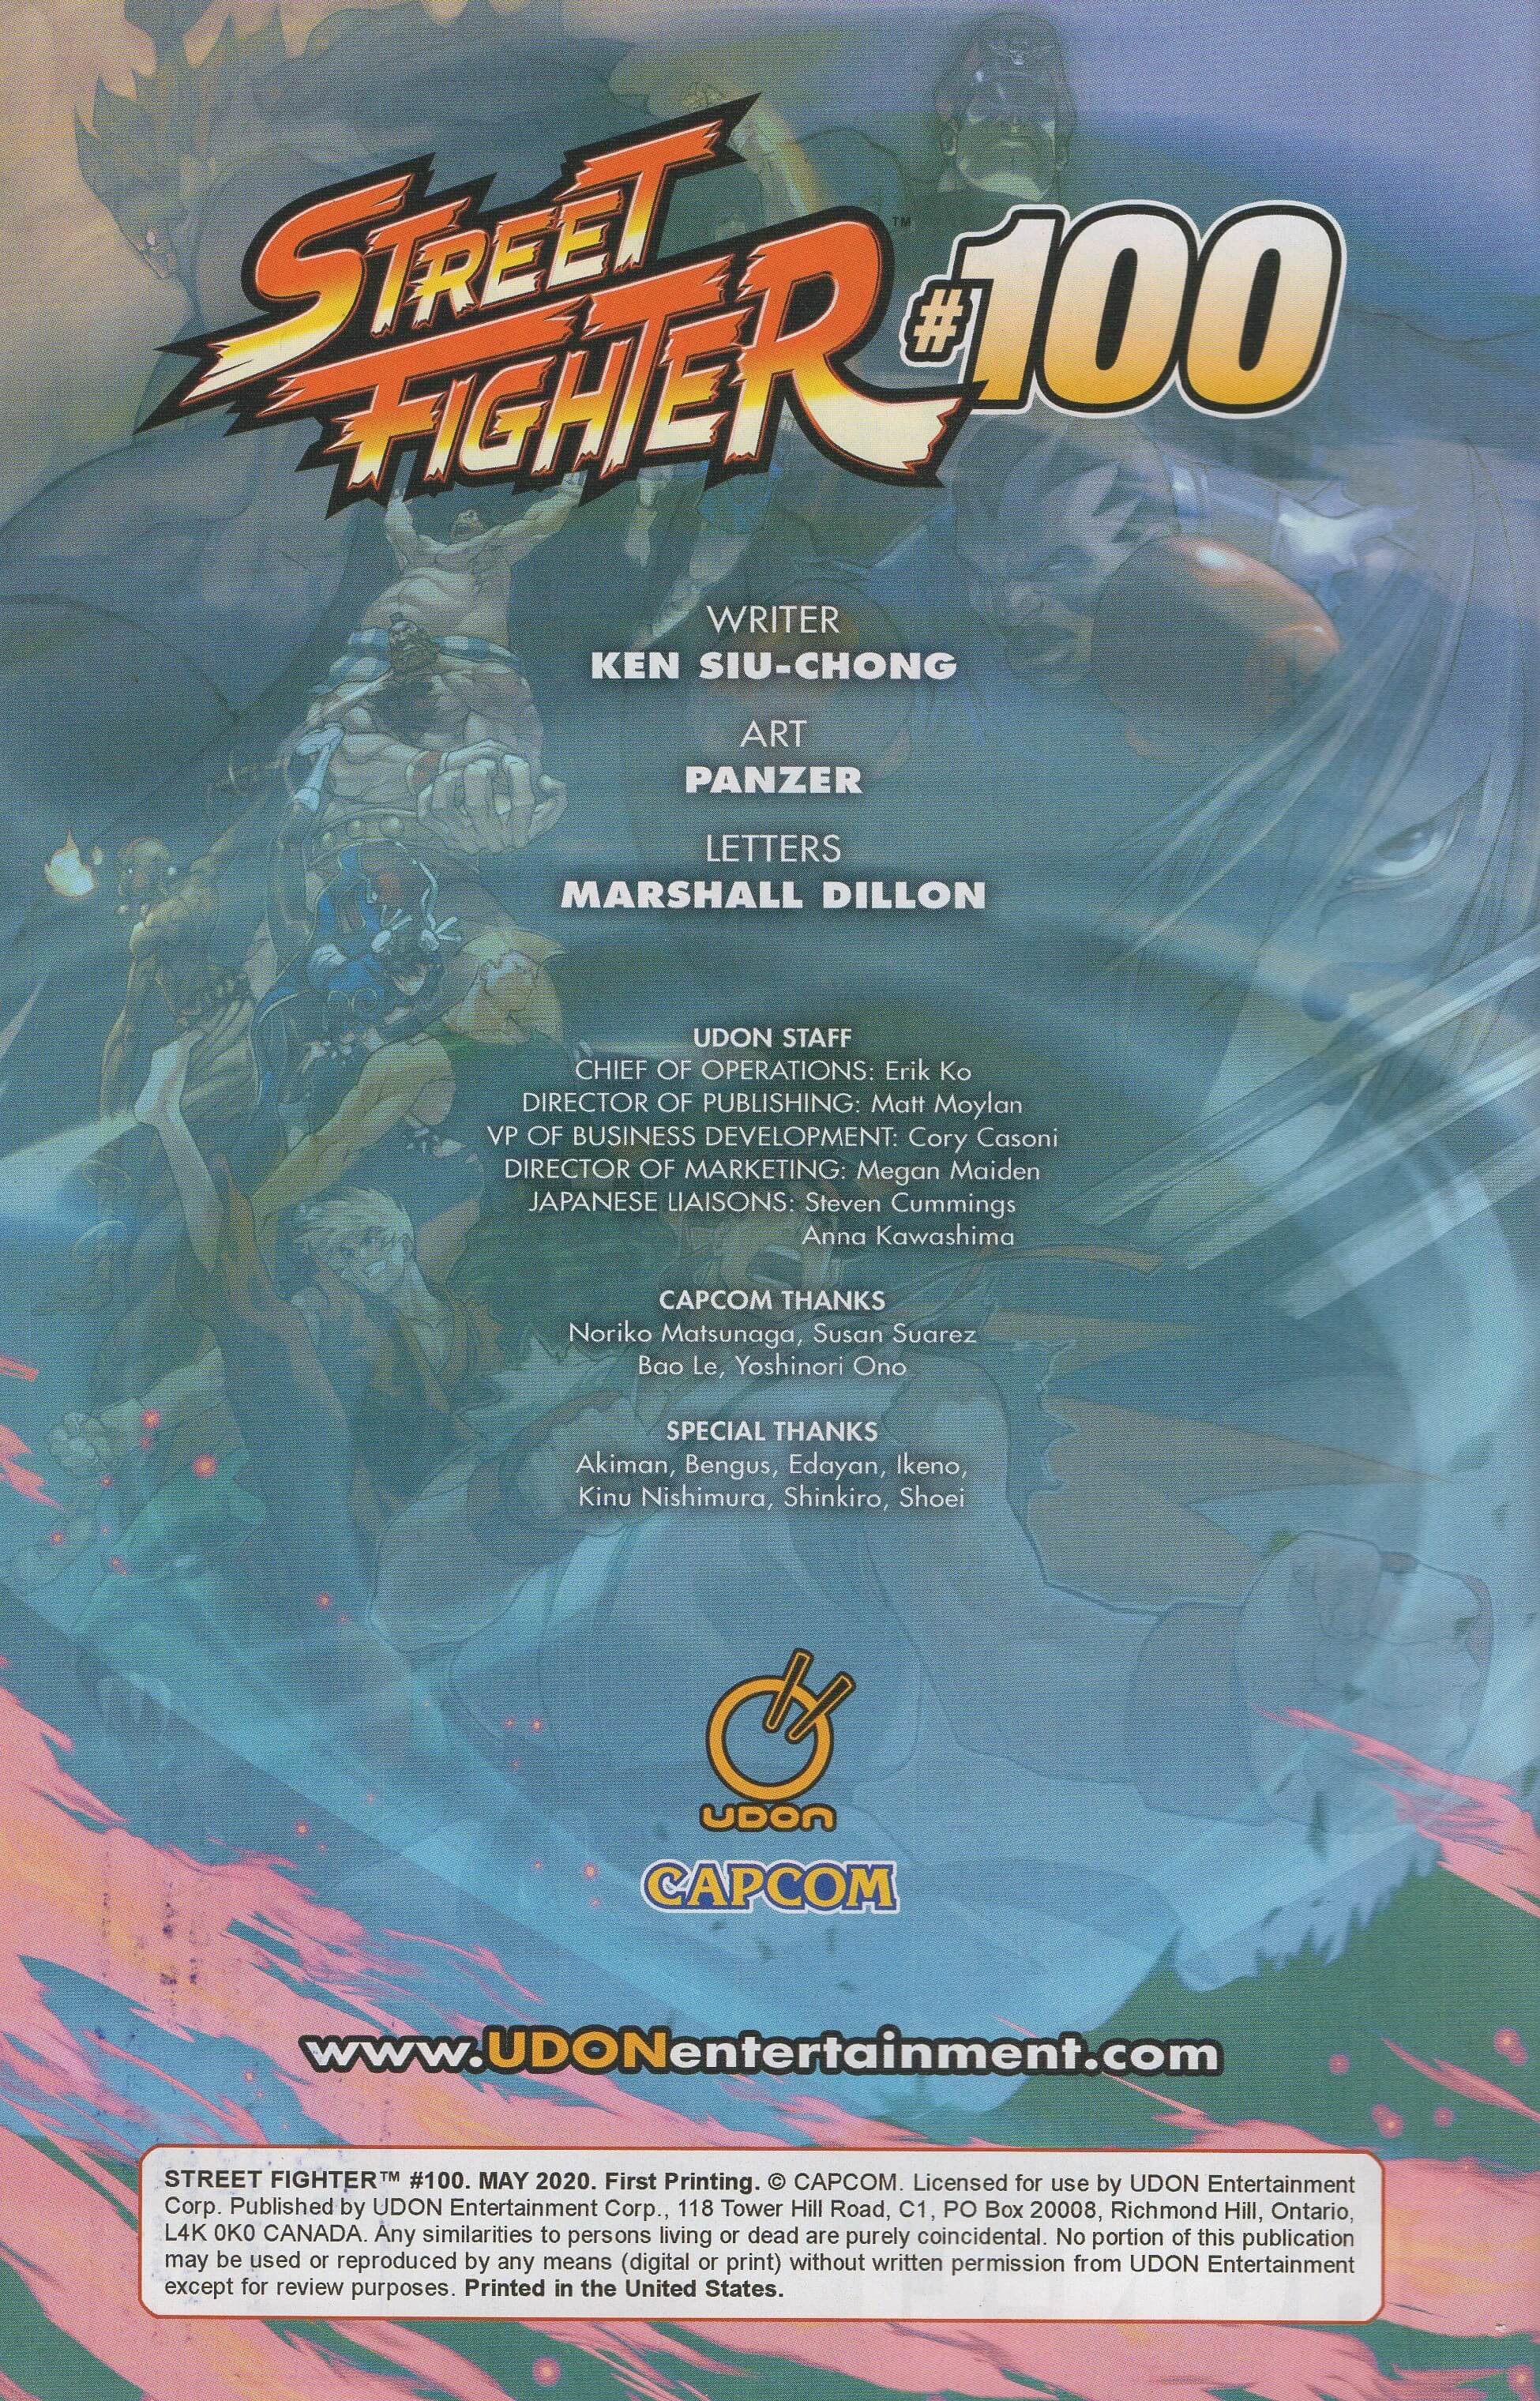 Read online Free Comic Book Day 2020 comic -  Issue # Street Fighter 100 - Ryu vs Chun-Li - 2